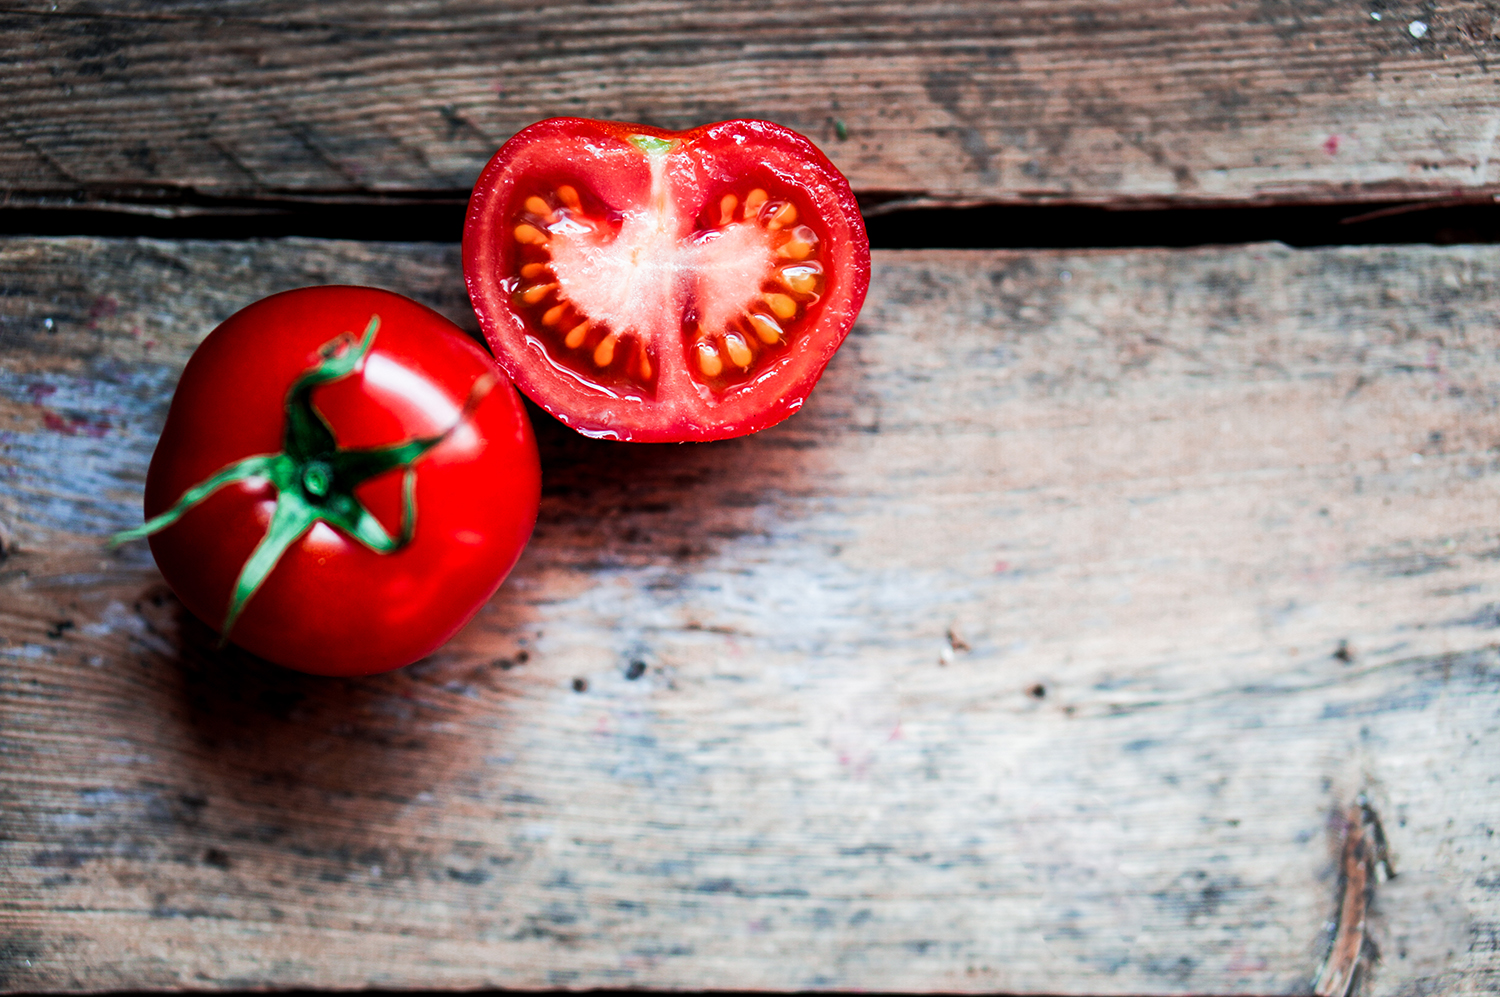 Tomaters Original Tomato Slice Image